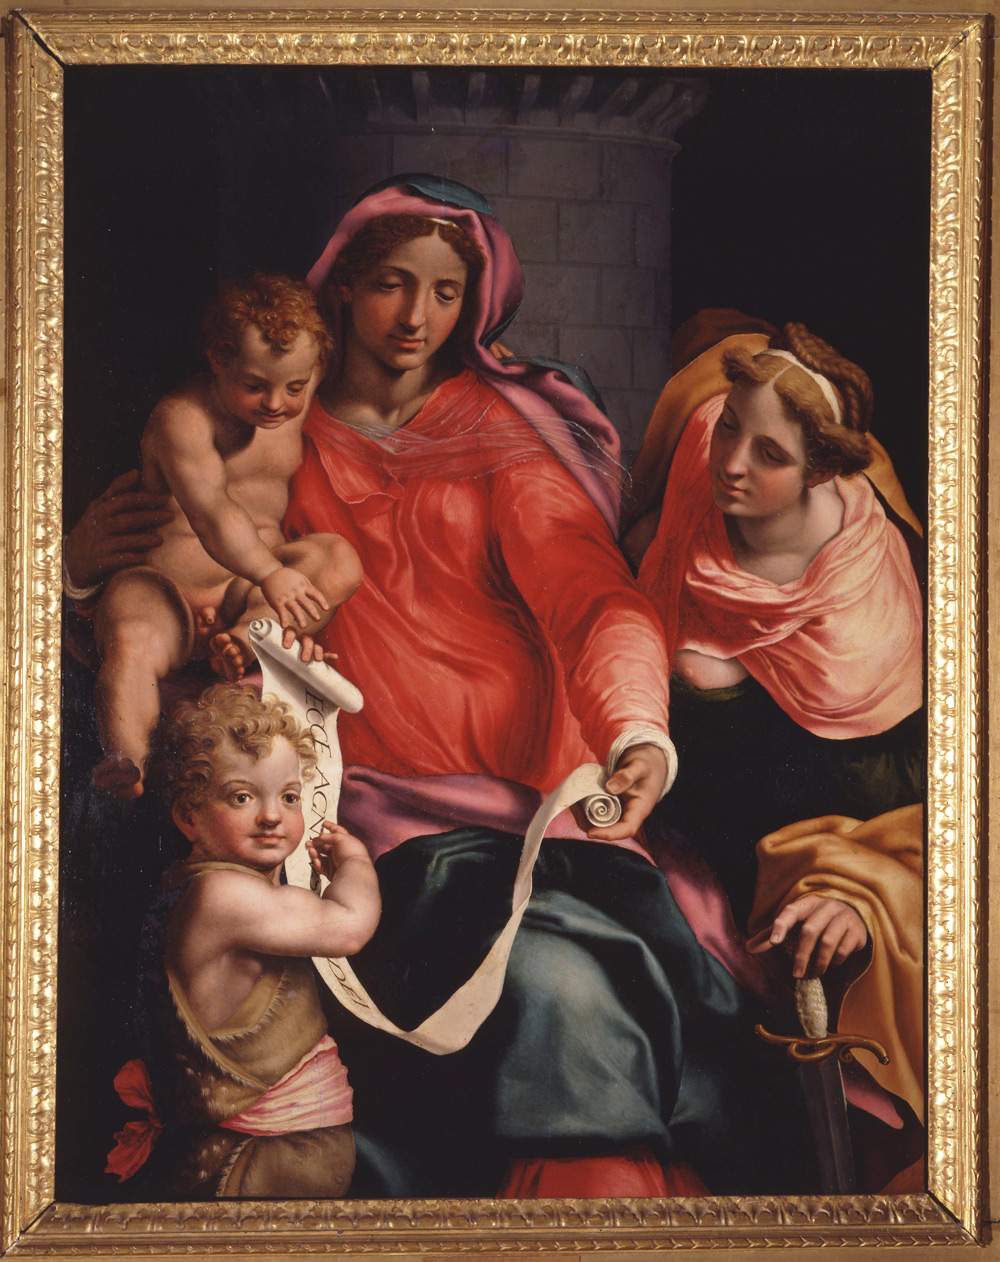 Major purchase for Uffizi, Daniele da Volterra's Madonna arrives: d'Elci masterpieces reunited